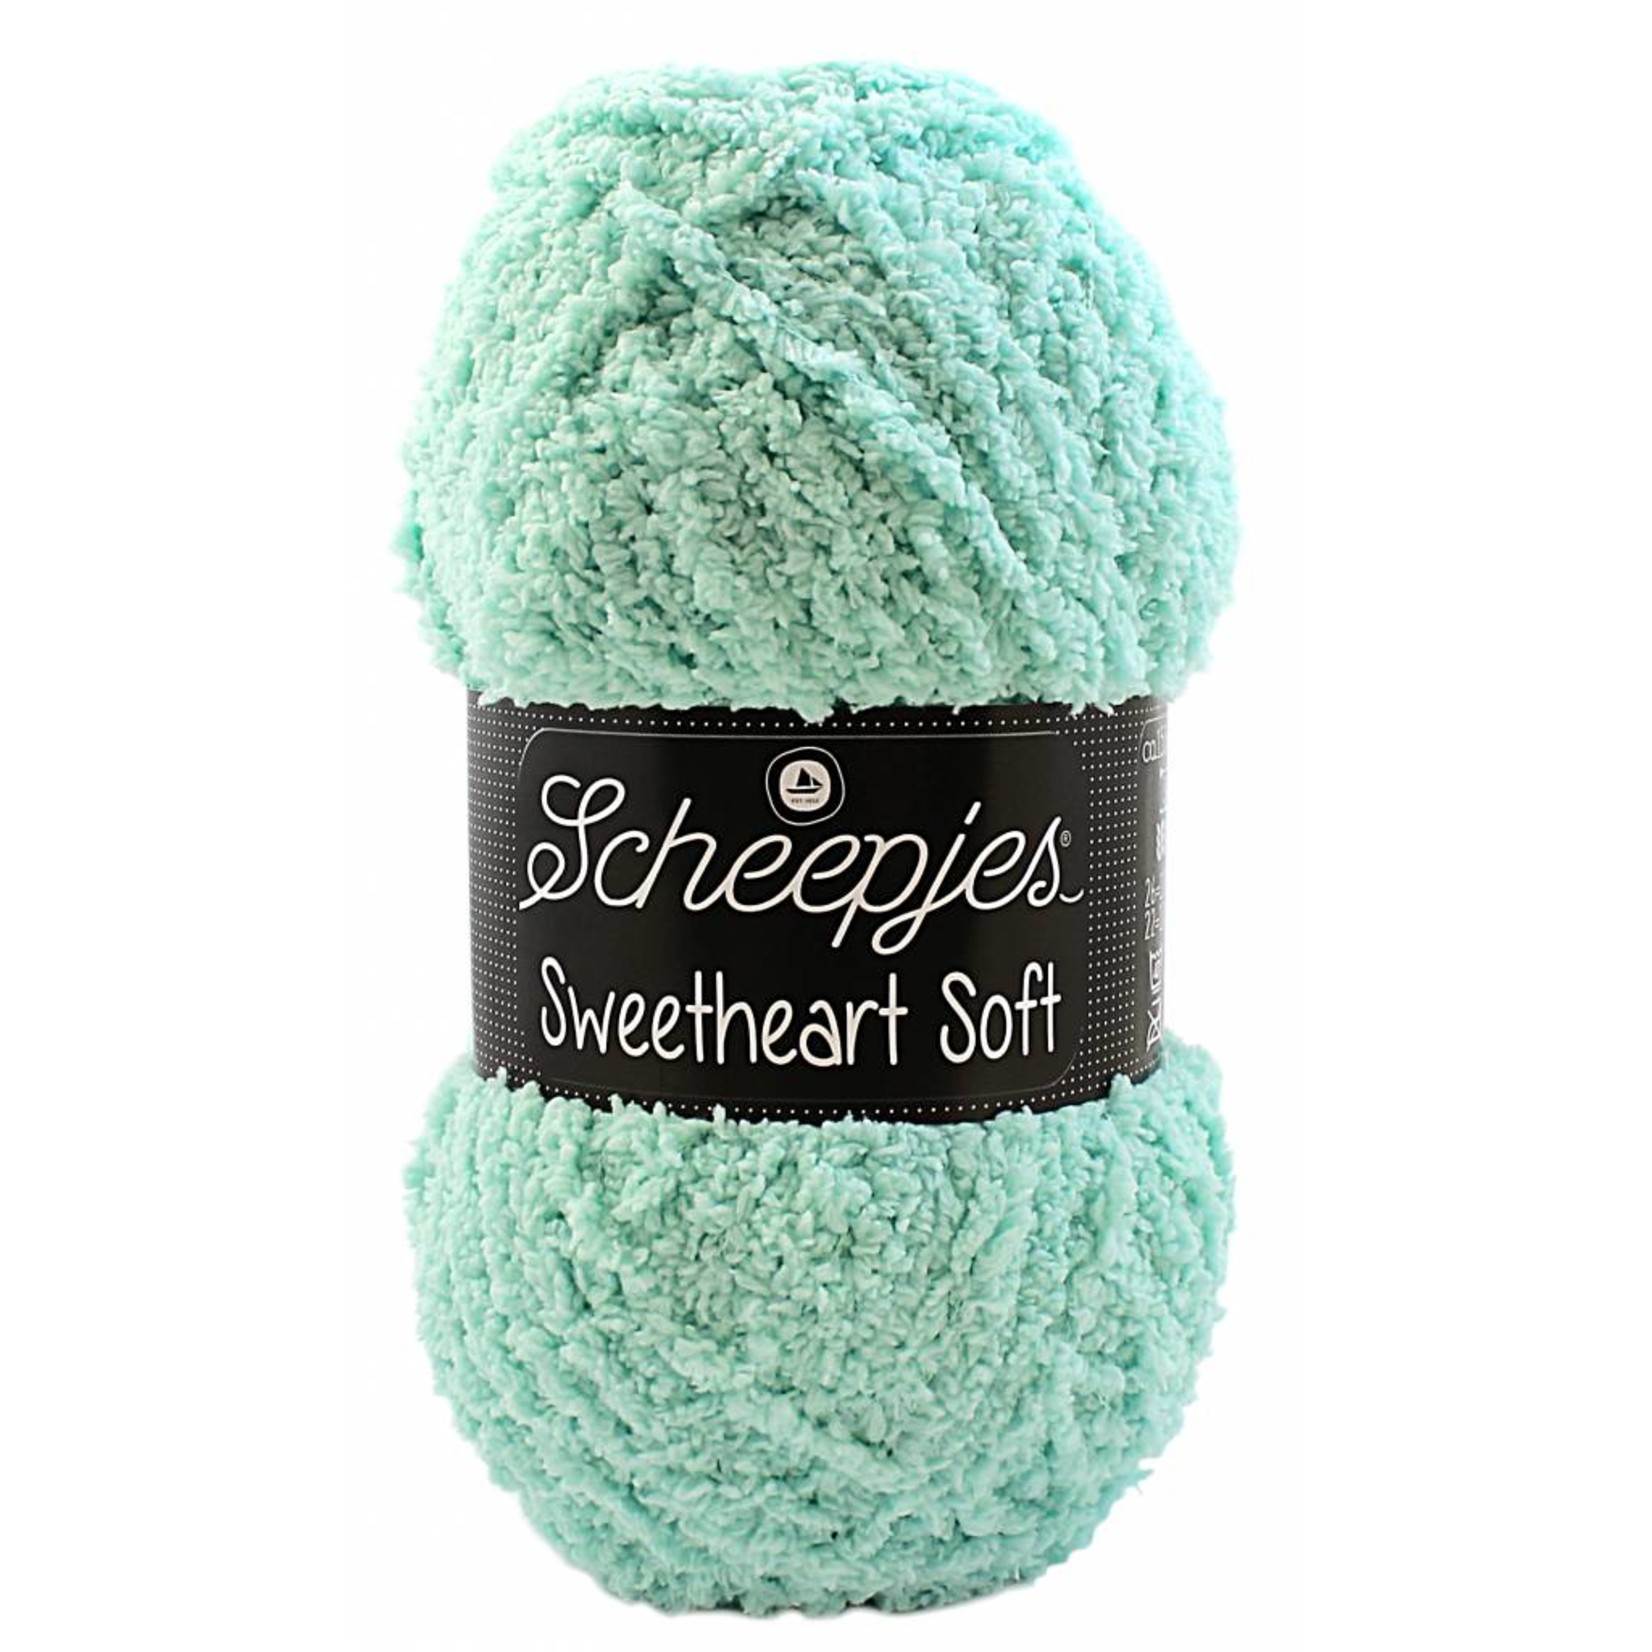 Scheepjes Sweetheart Soft 17 Turquoise